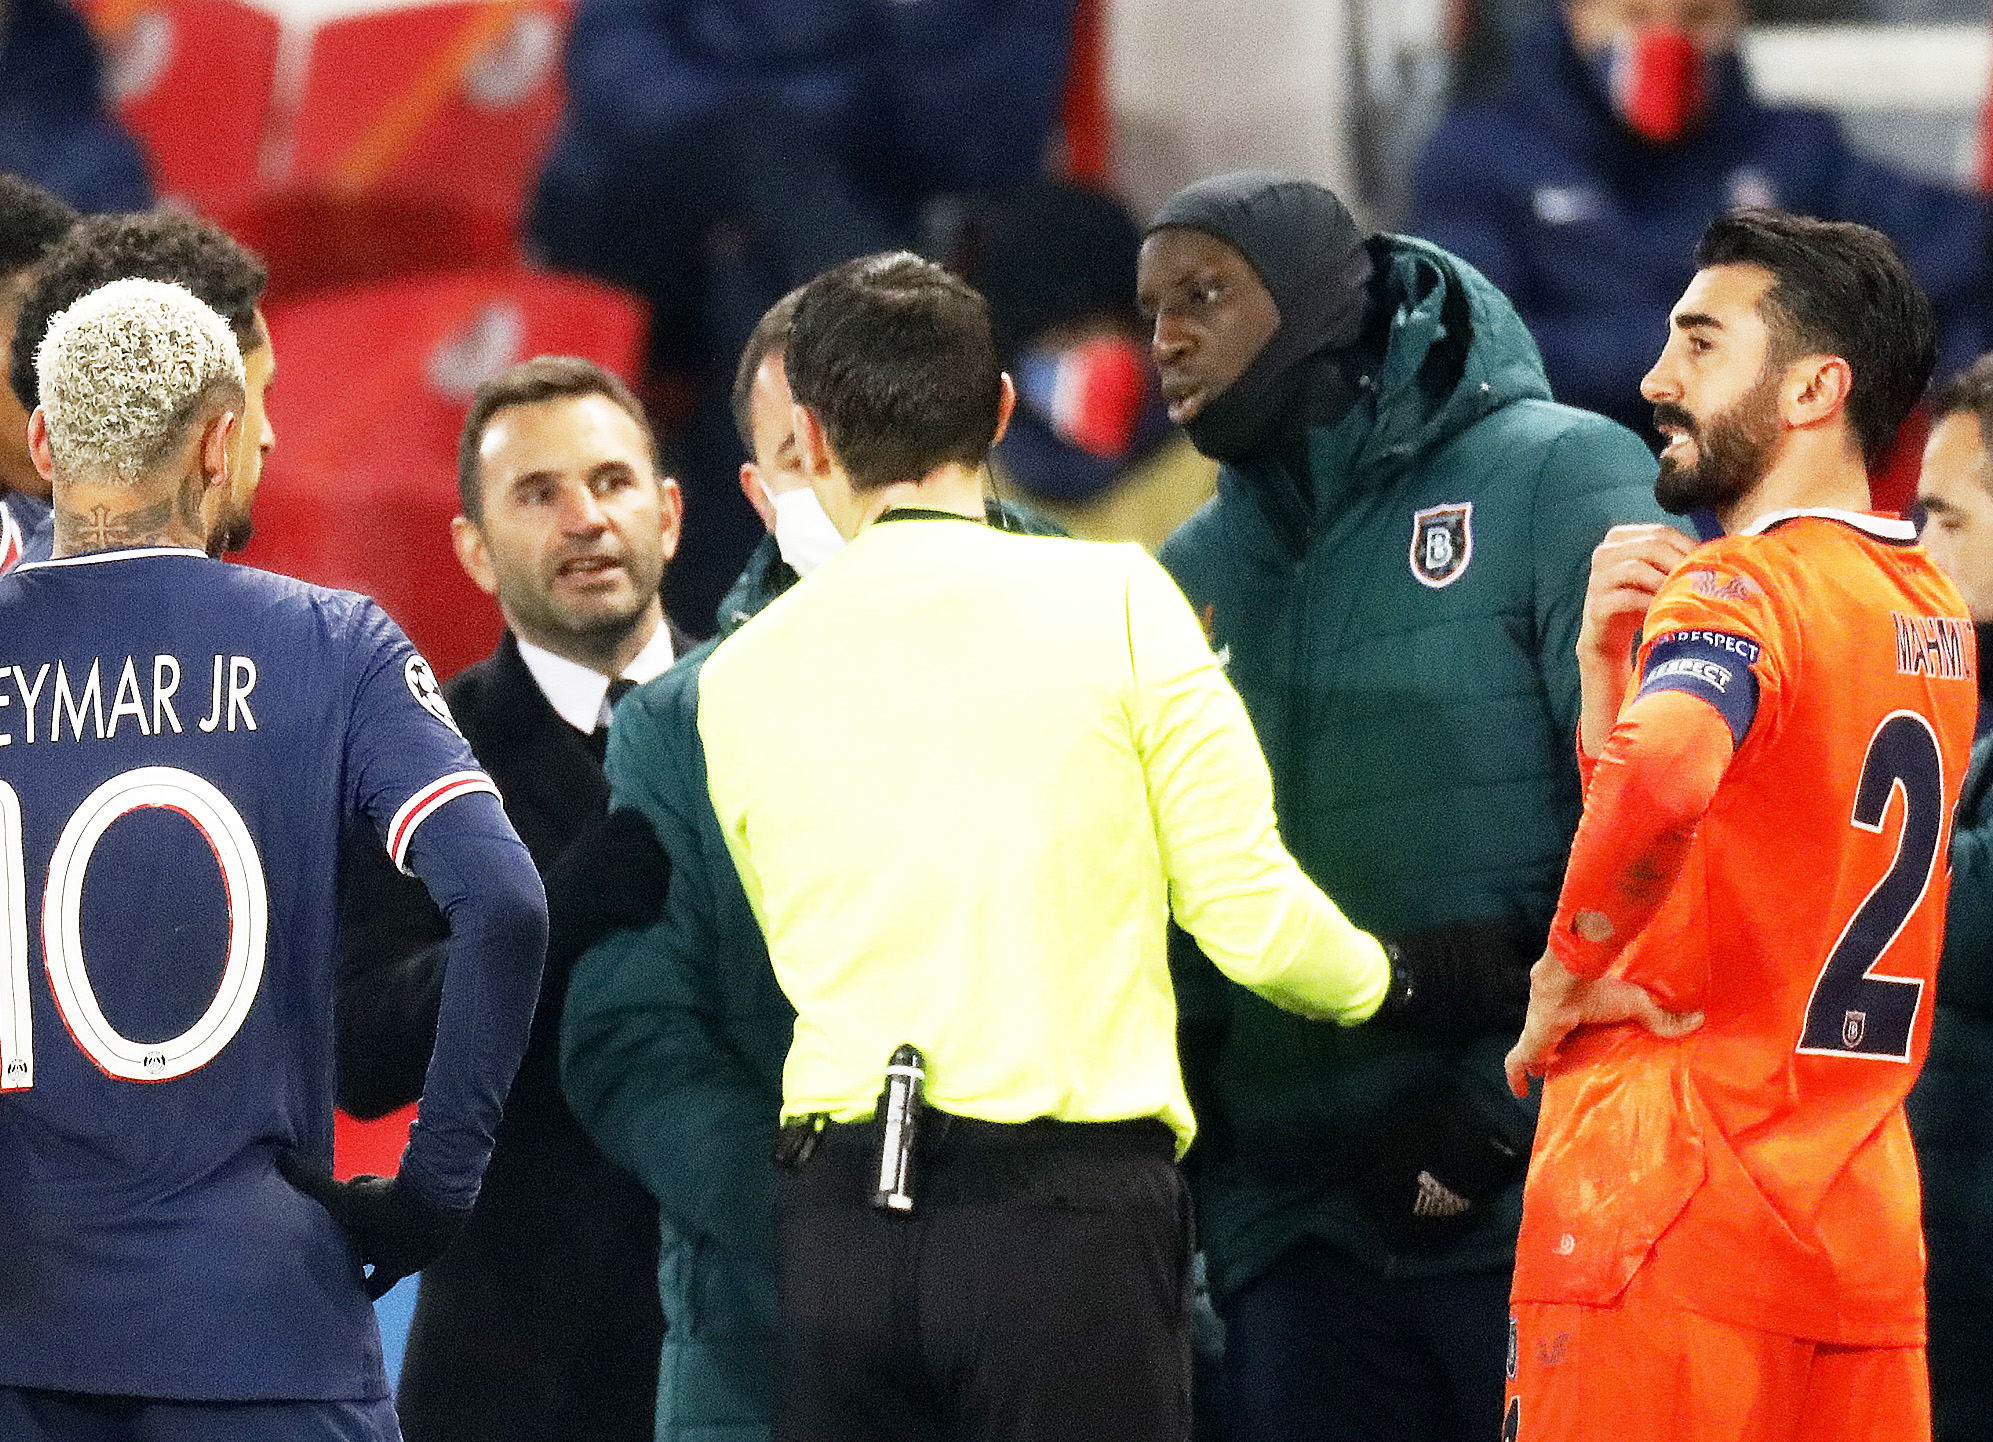 Soccer UEFA open disciplinary case over Paris race incident | Reuters